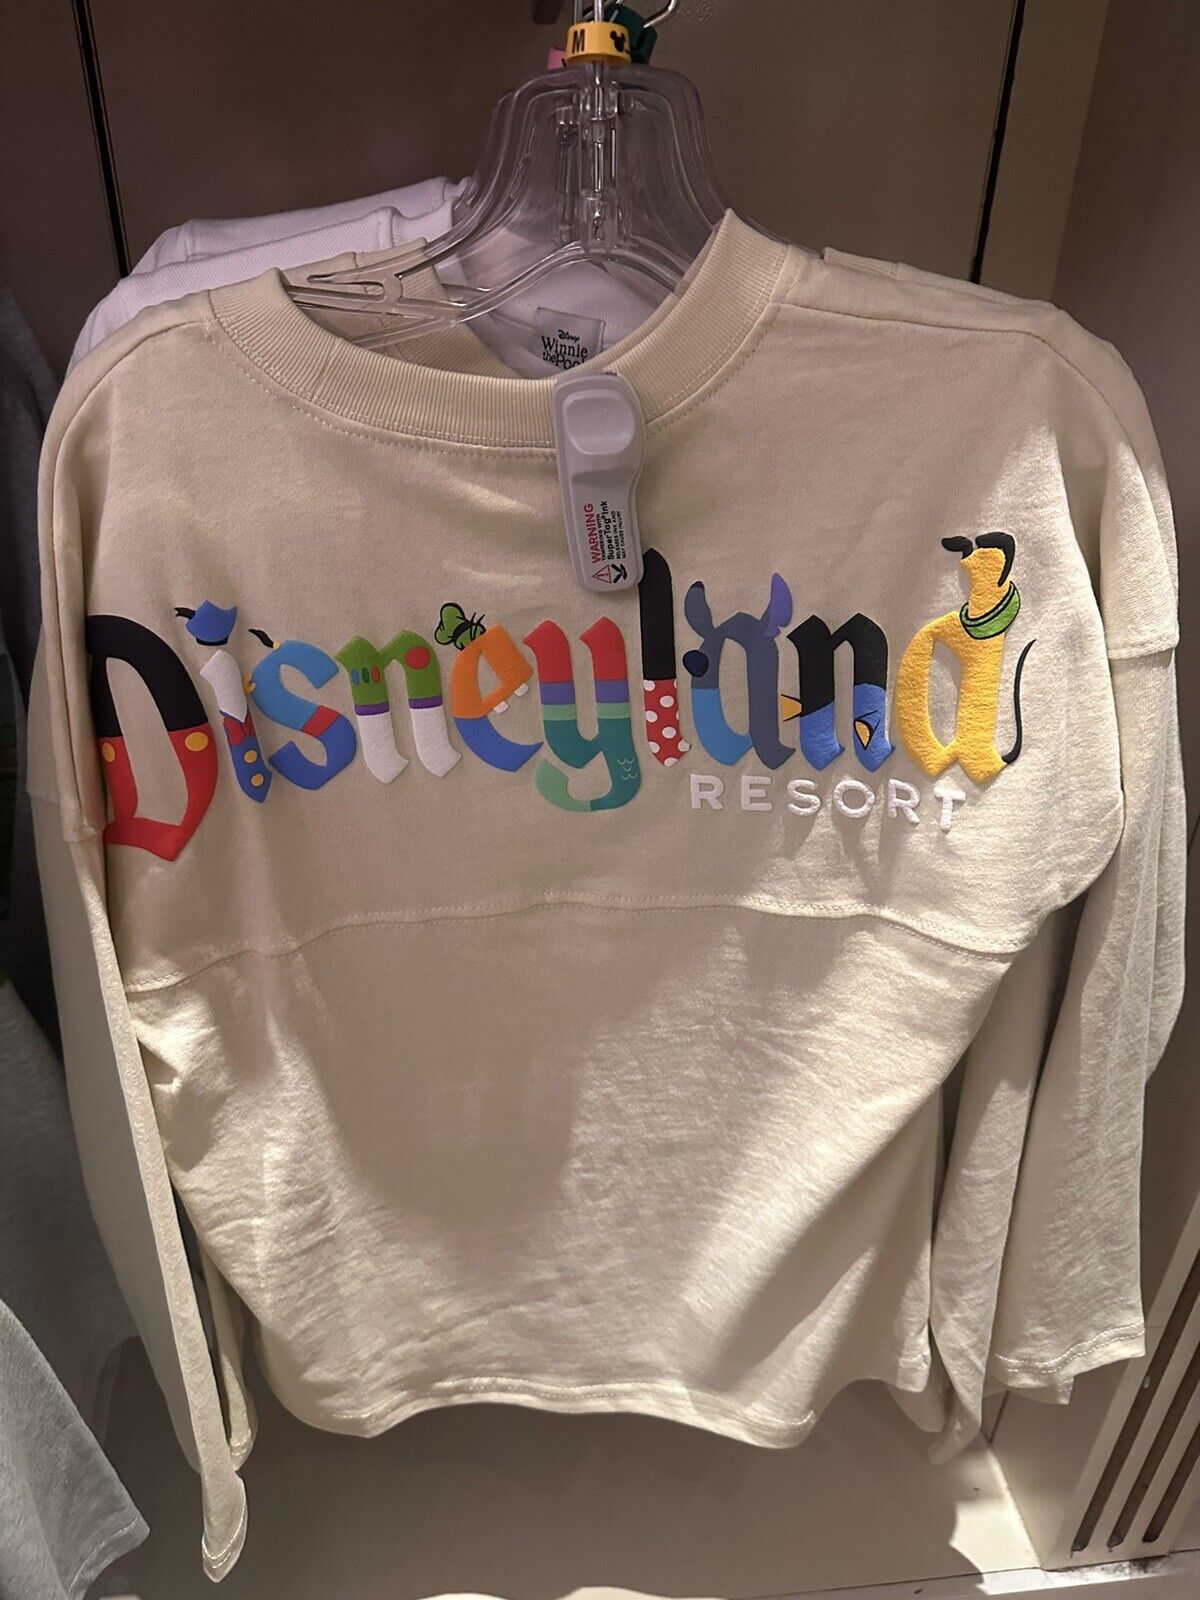 Disneyland character letters spirit jersey Kids Size Medium (7/8)